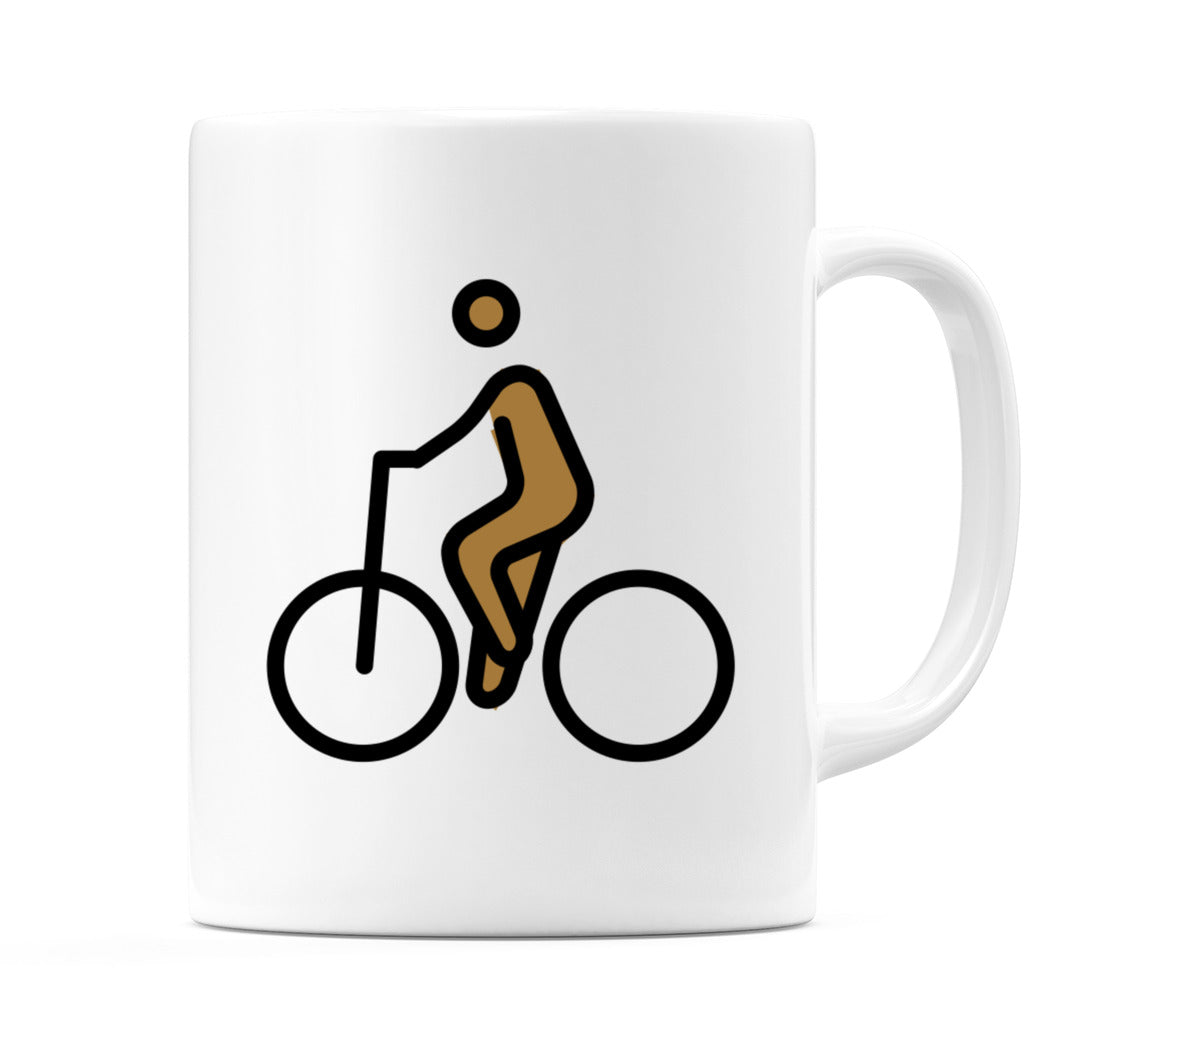 Person Biking: Medium-Dark Skin Tone Emoji Mug